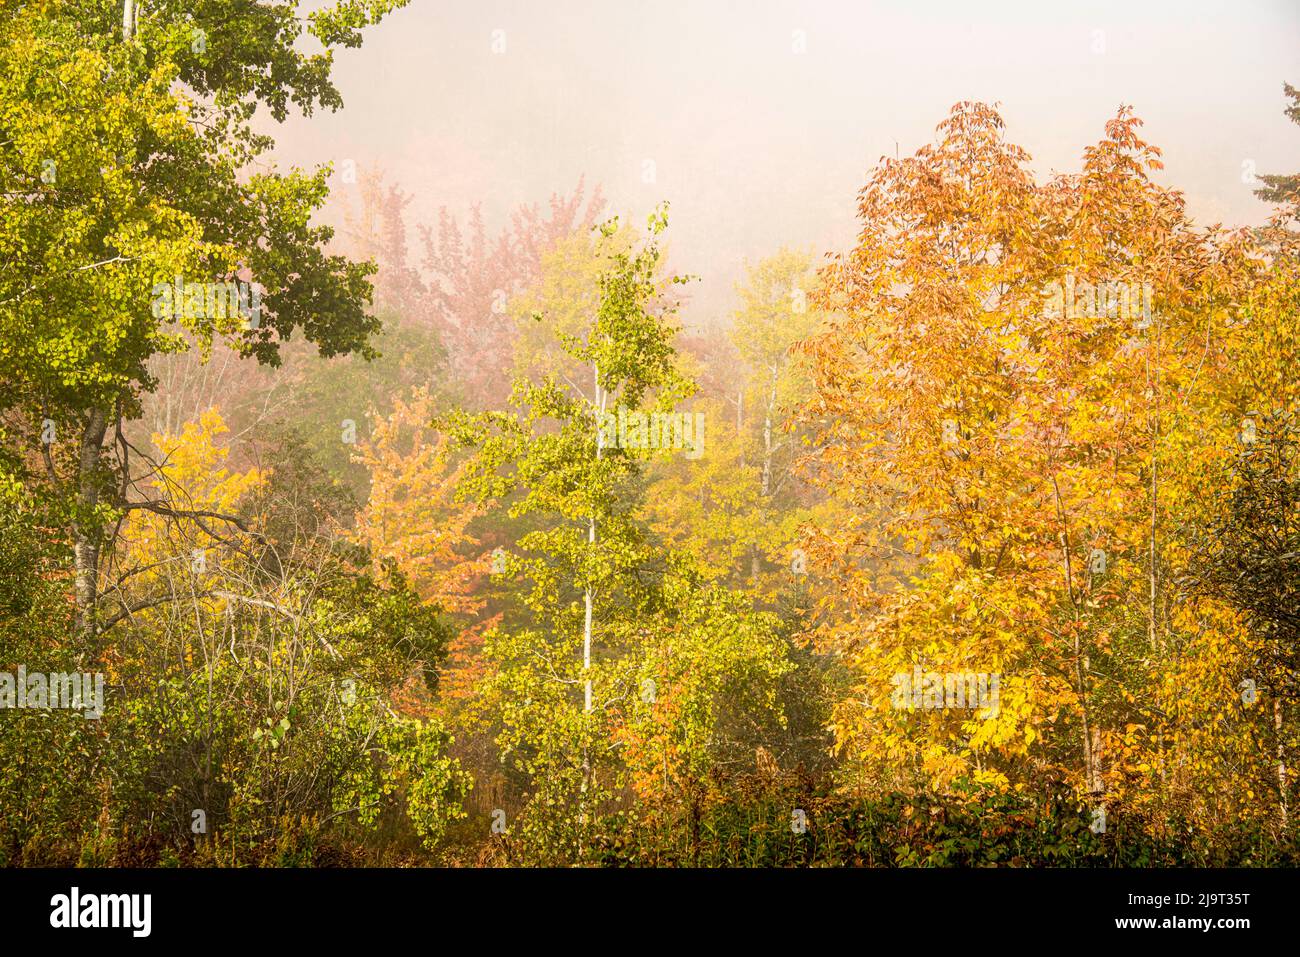 USA, New Hampshire, fall foliage north of Whitefield, along Rt. 3. Stock Photo